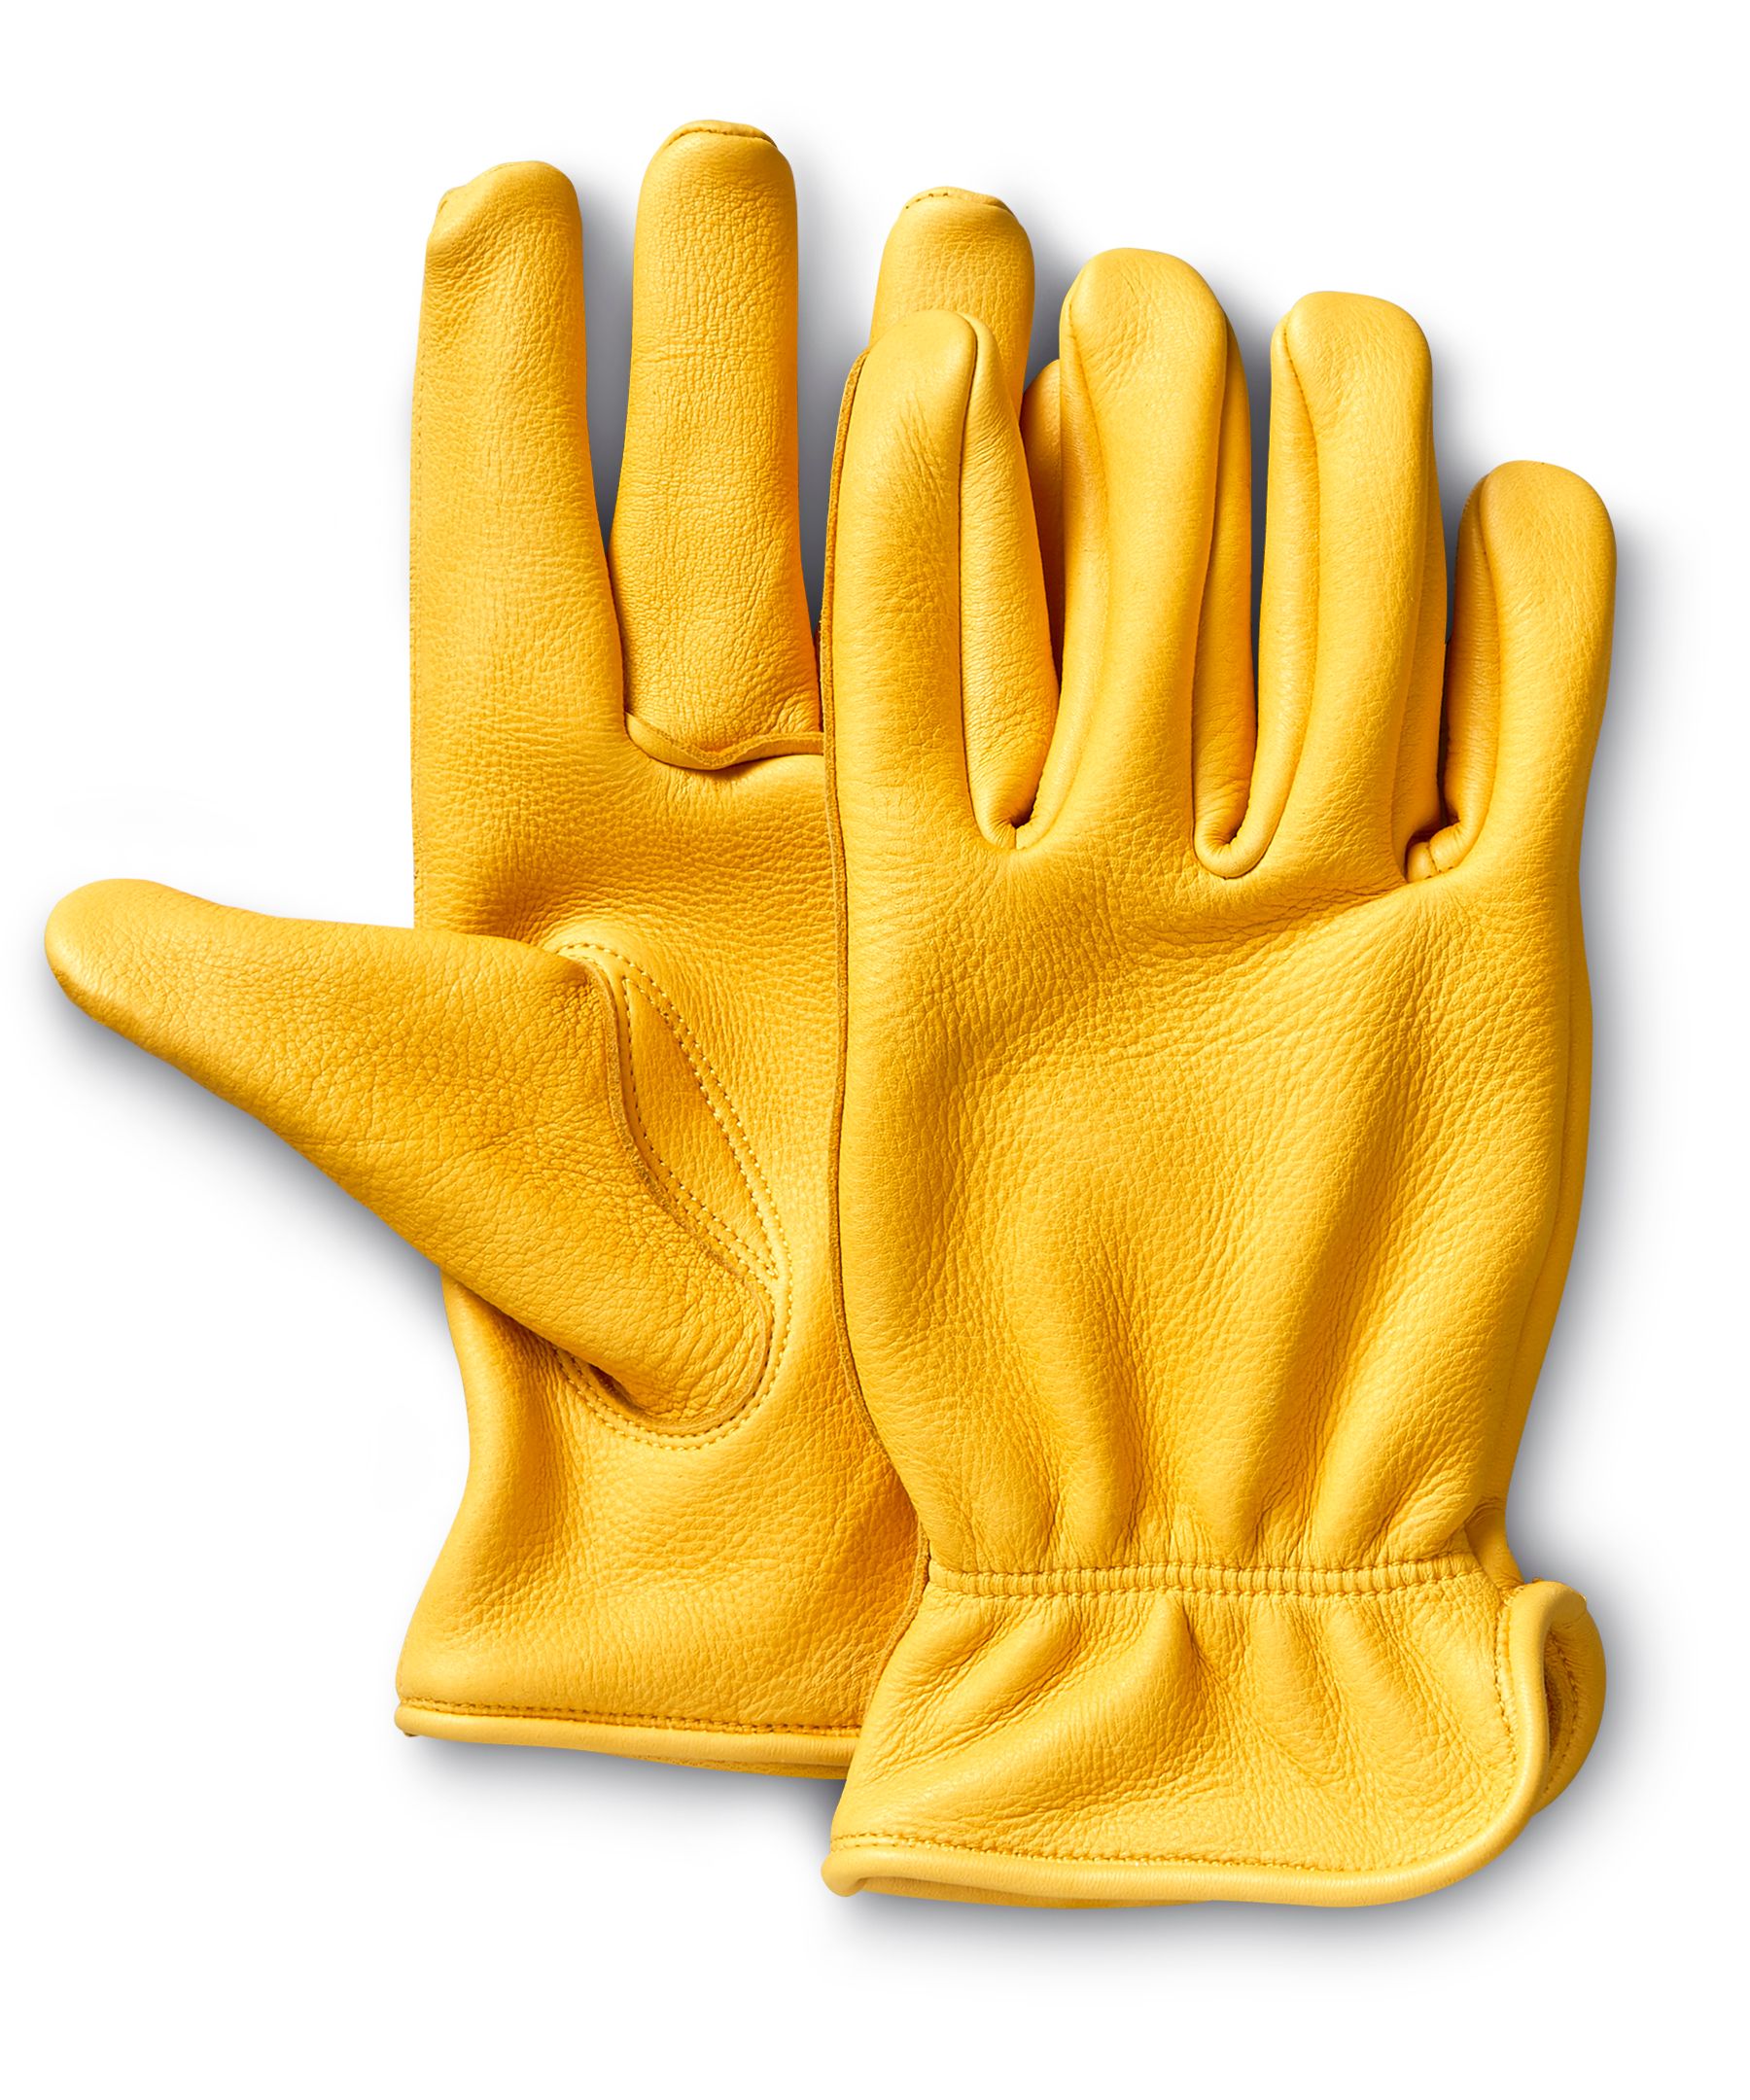 Dakota WorkPro Series Men's Deerskin Work and Casual Gloves - Gold